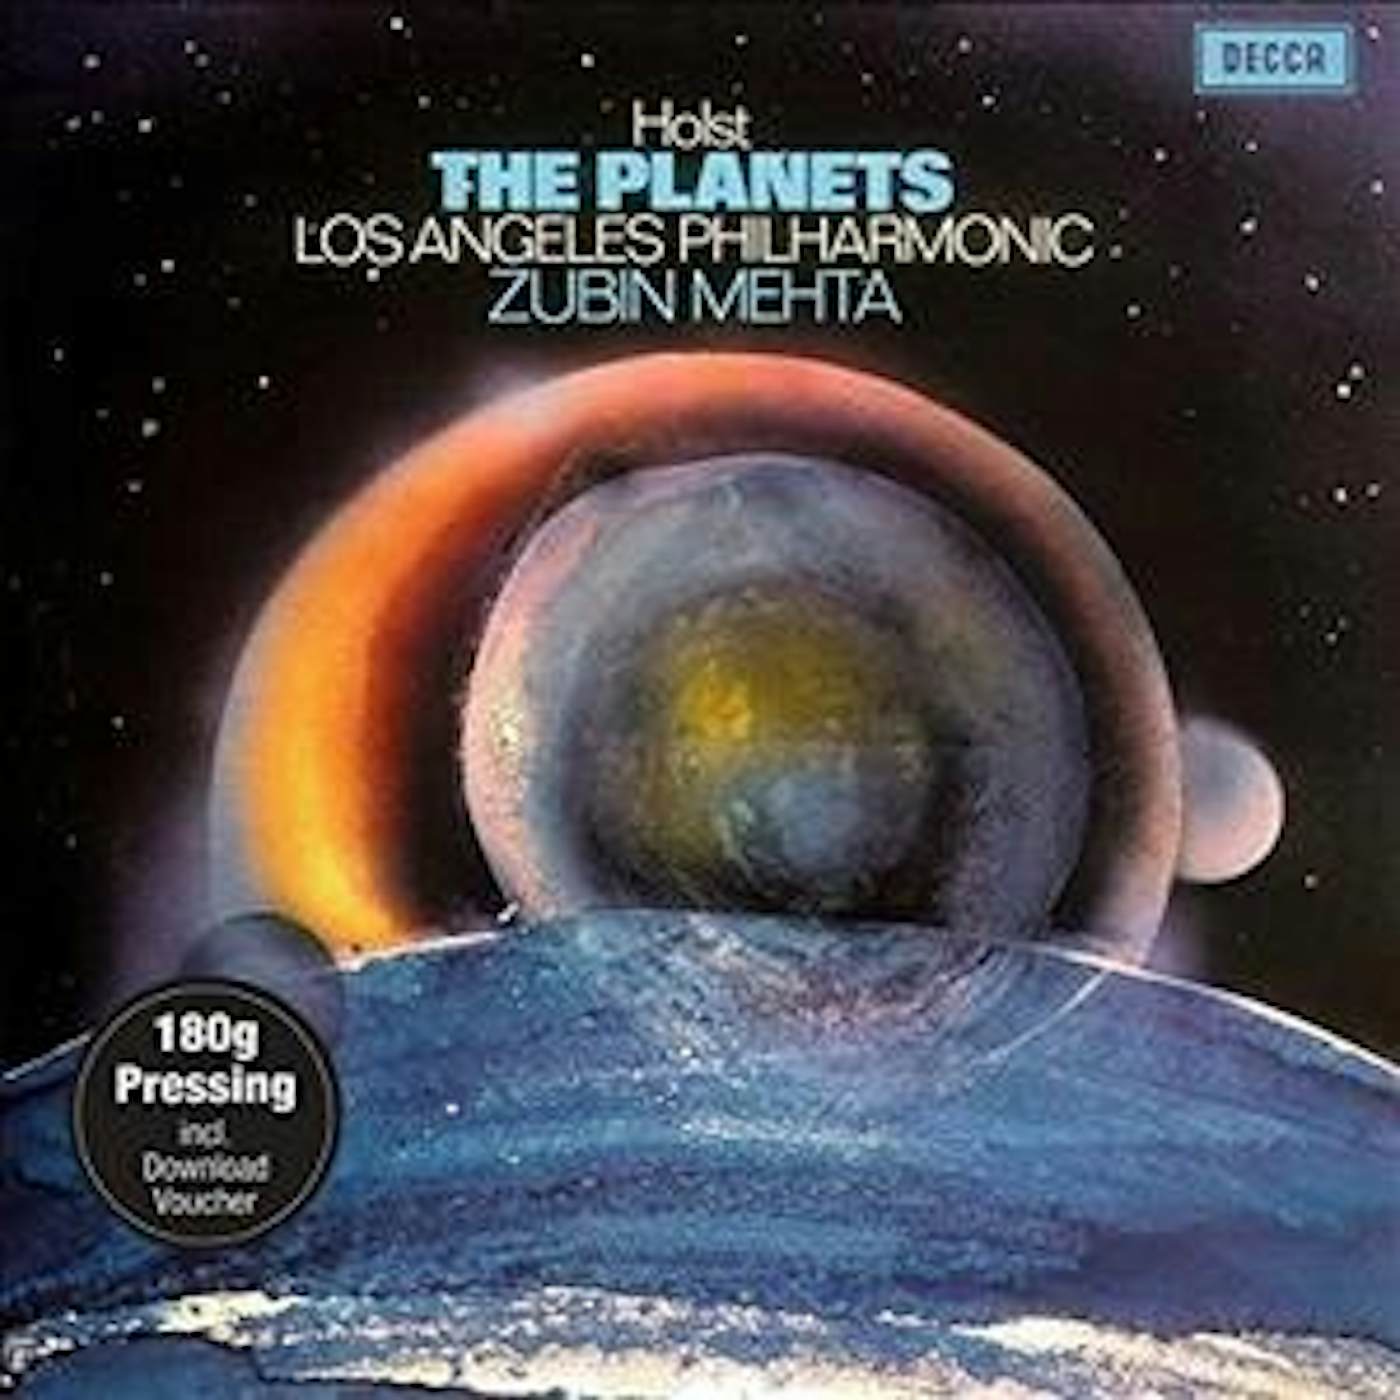 Zubin Mehta Holst: The Planets Vinyl Record